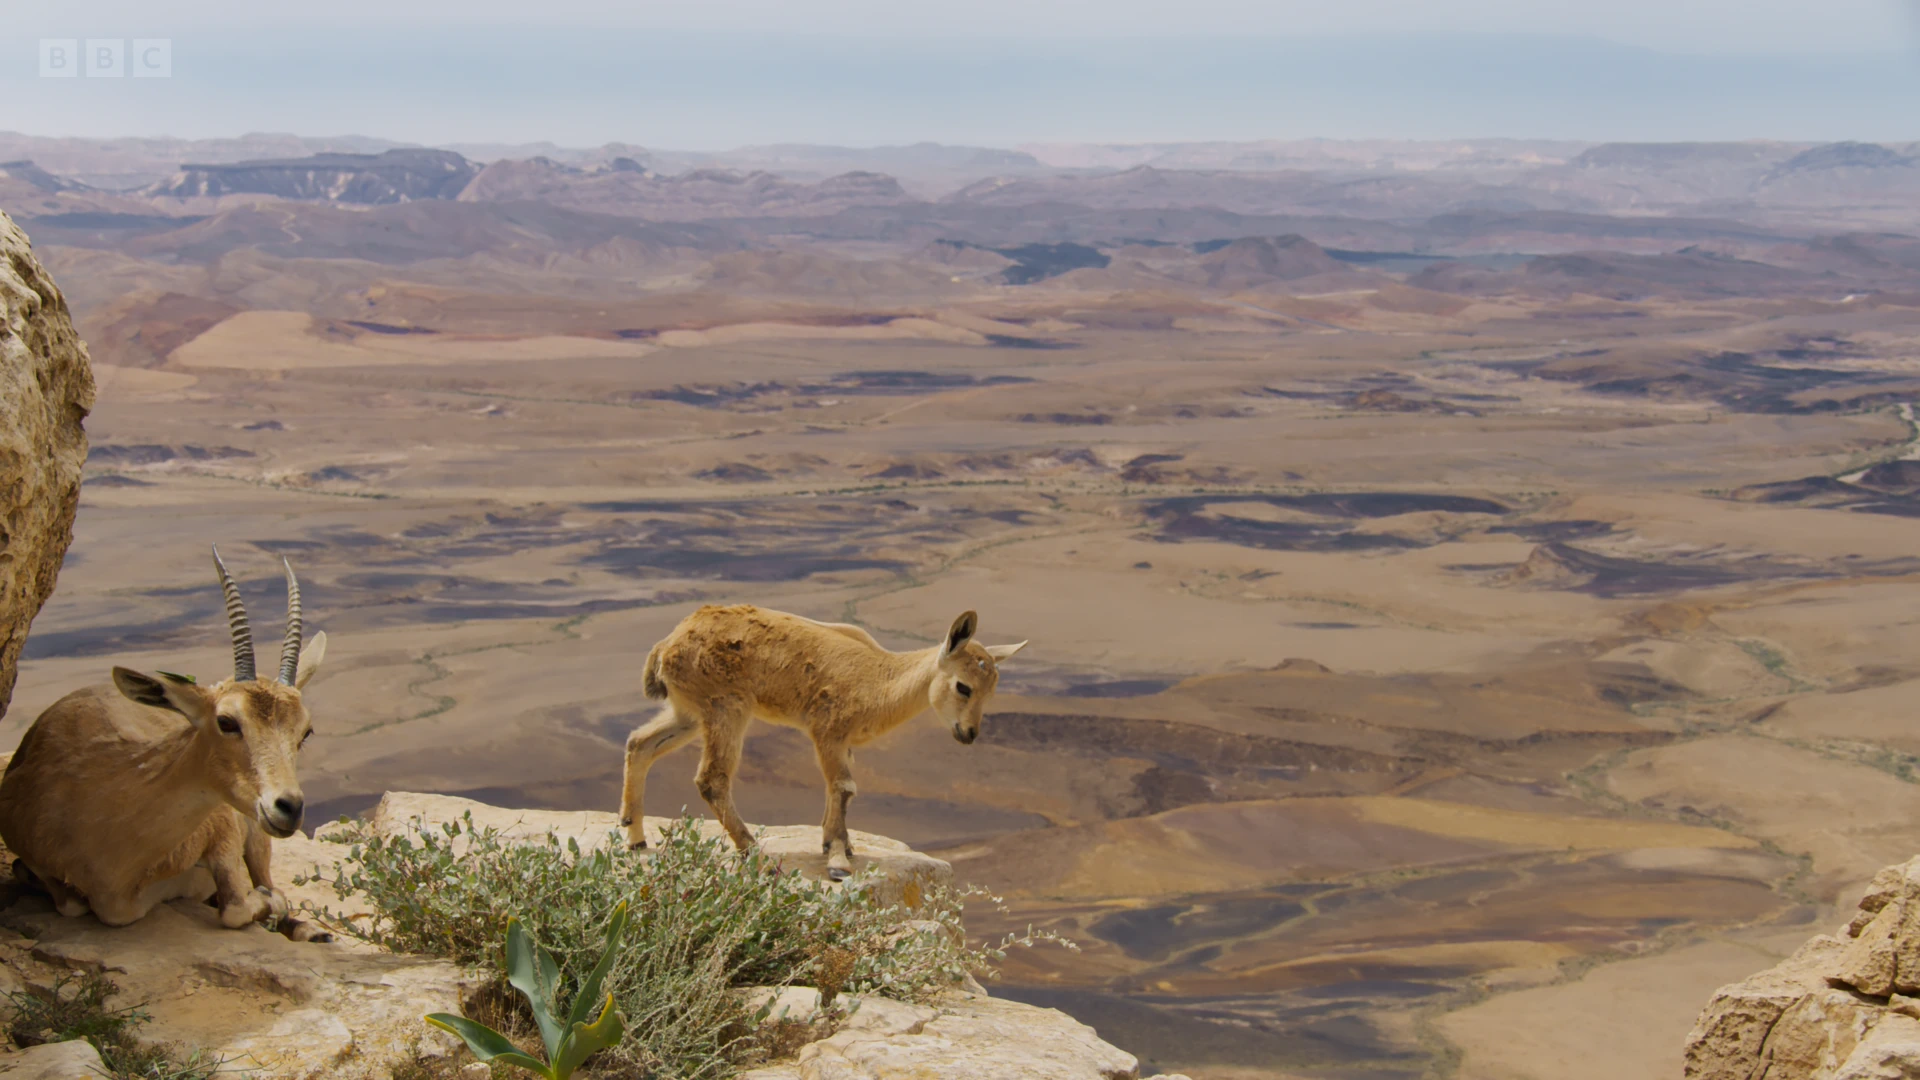 Nubian ibex (Capra nubiana) as shown in Planet Earth II - Mountains